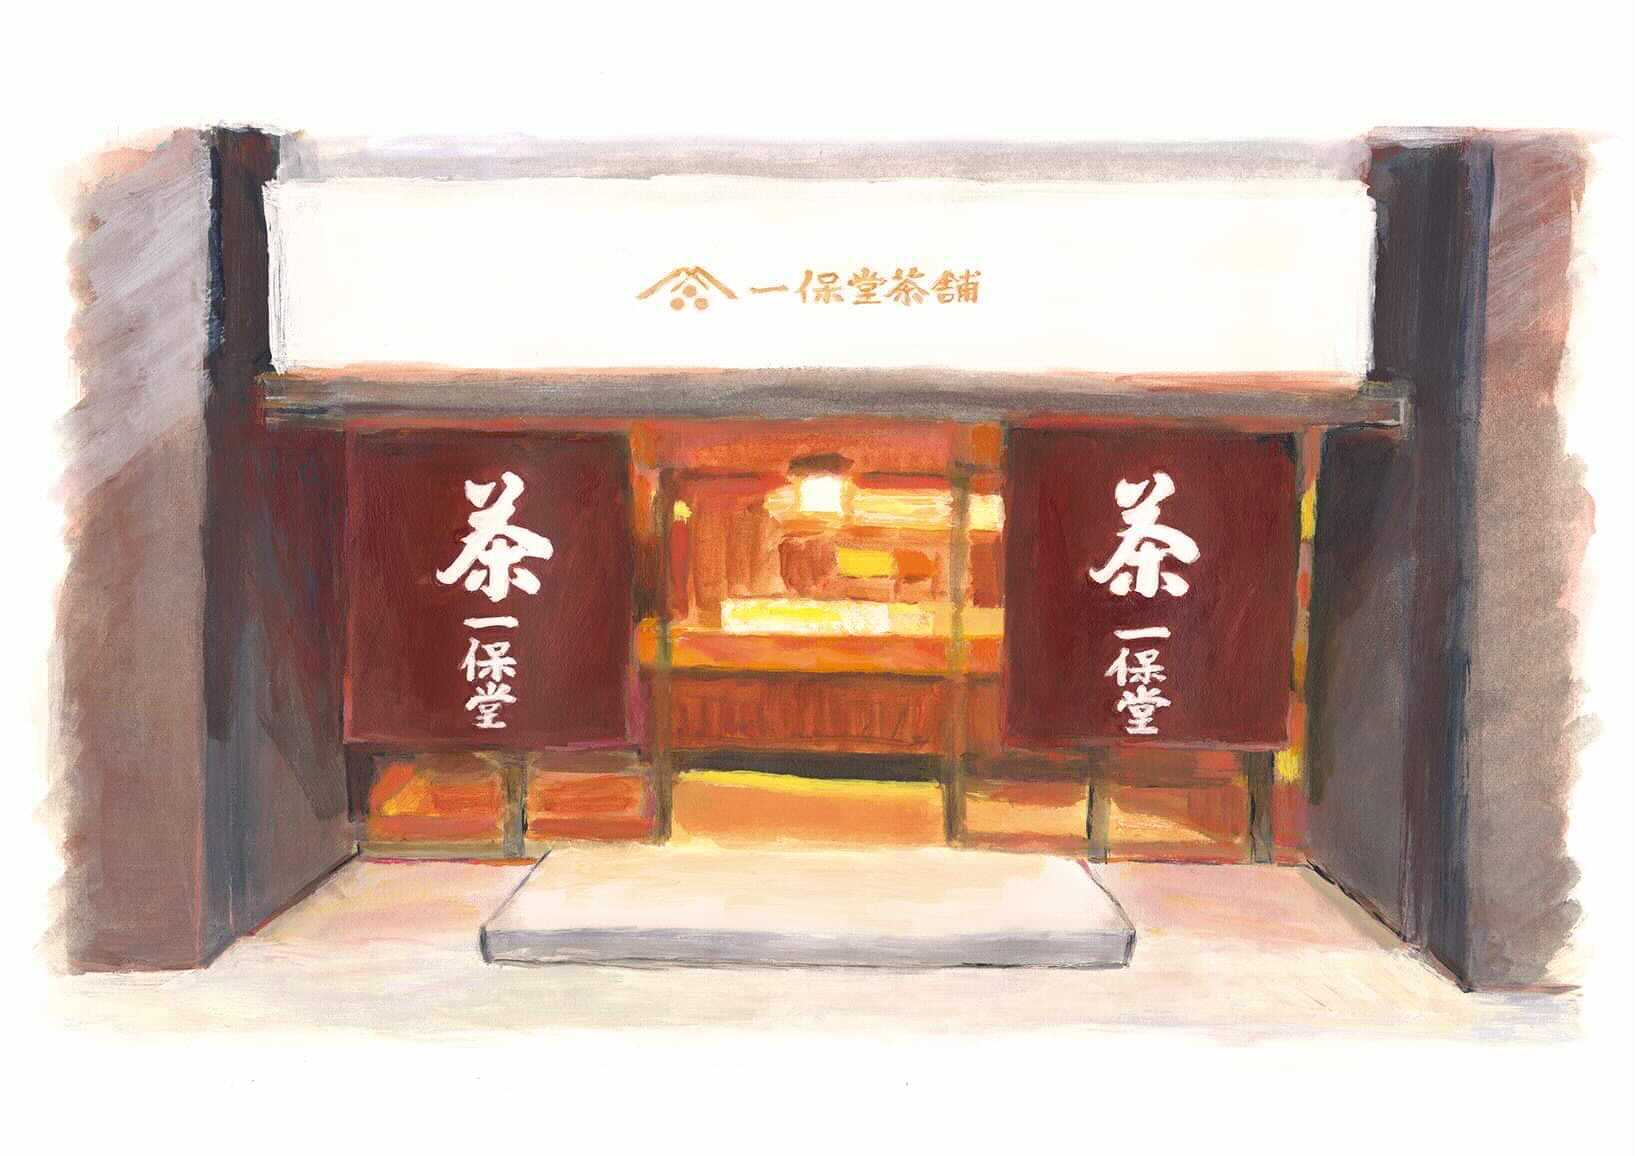 Tokyo Marunouchi Store: Kaboku Tearoom – Change in Last Order Time